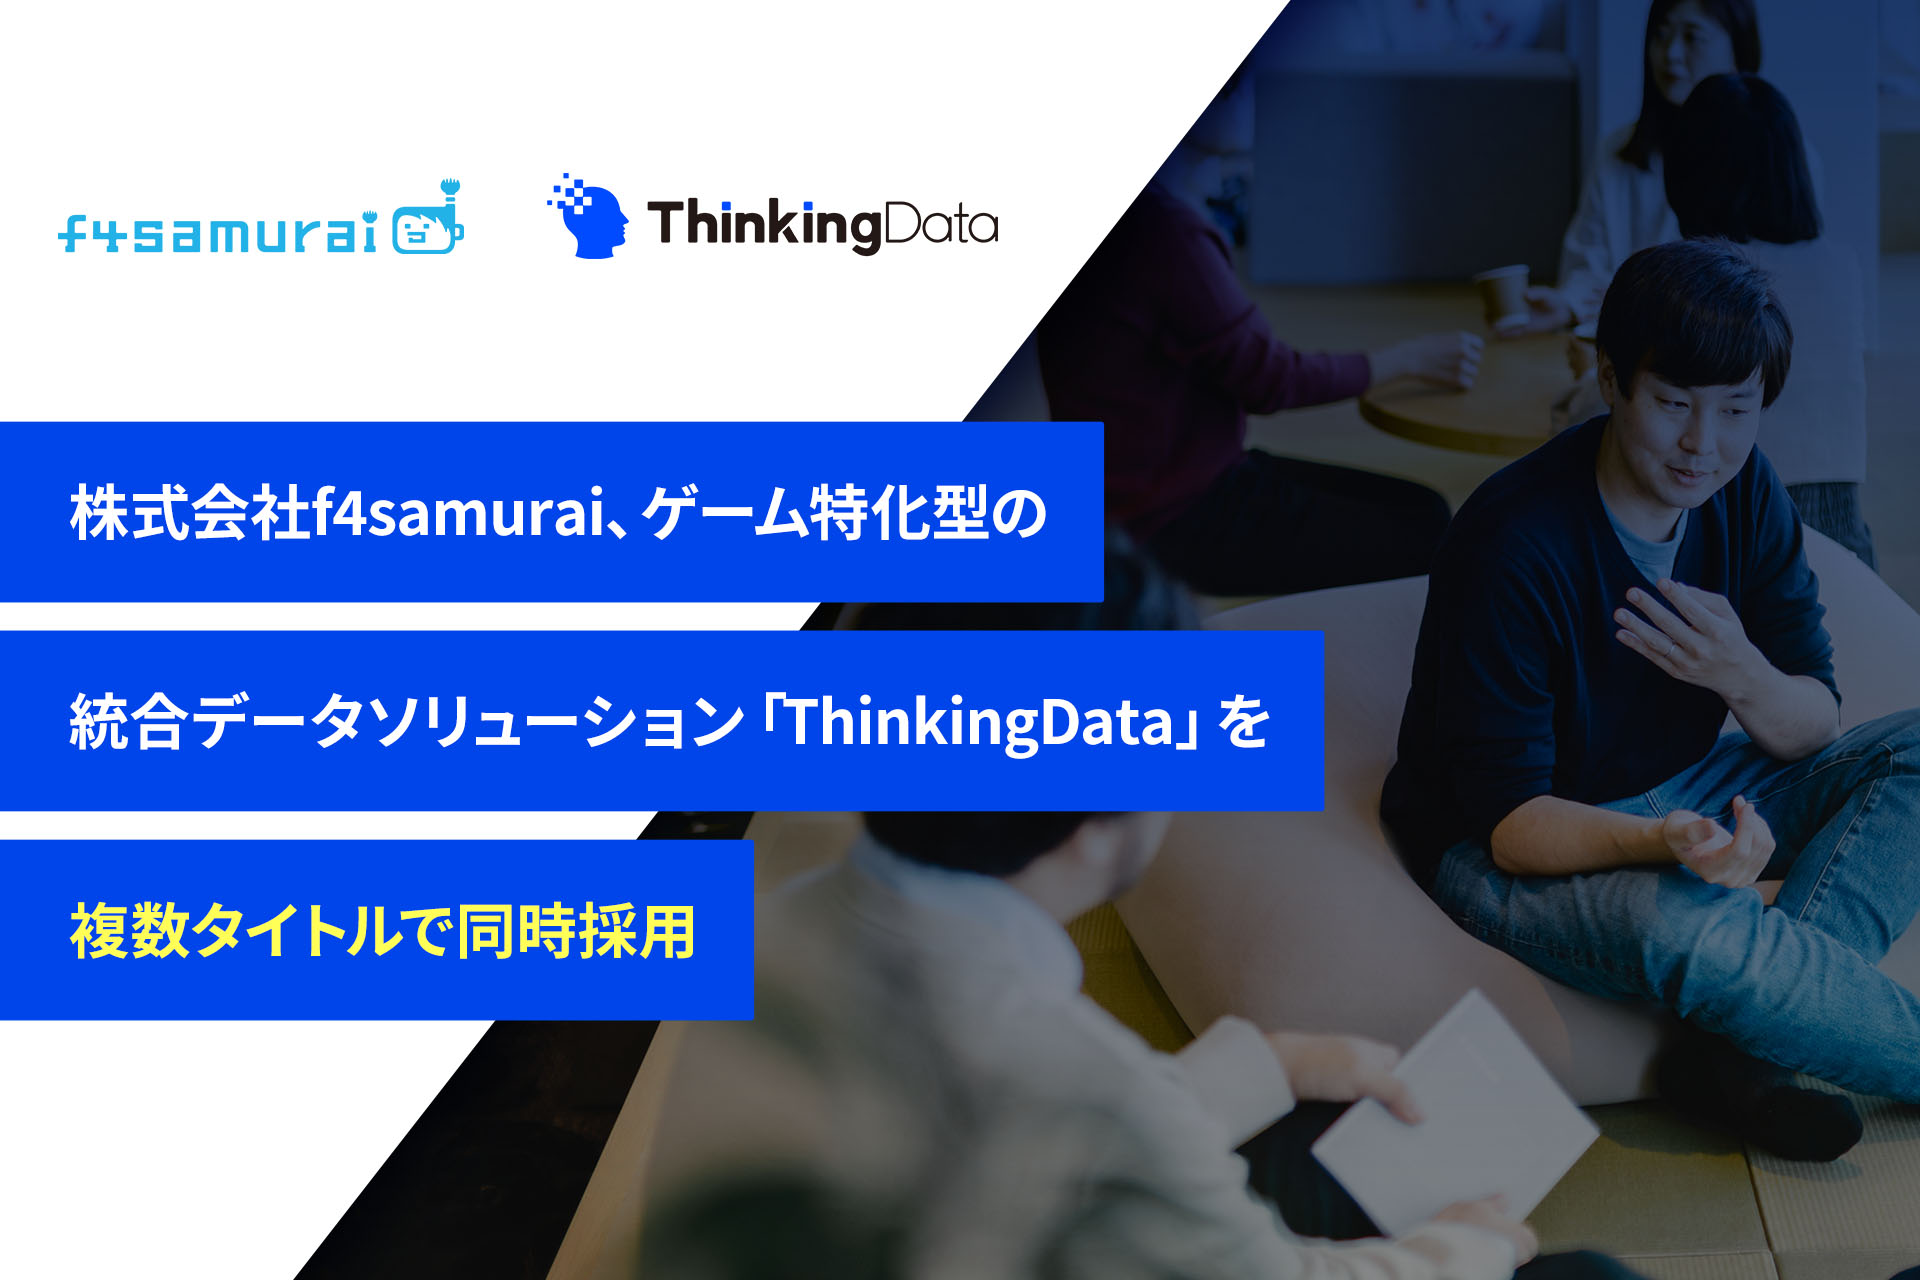 f4samurai、ゲーム特化型の統合データソリューション「ThinkingData」を複数タイトルでの導入を決定